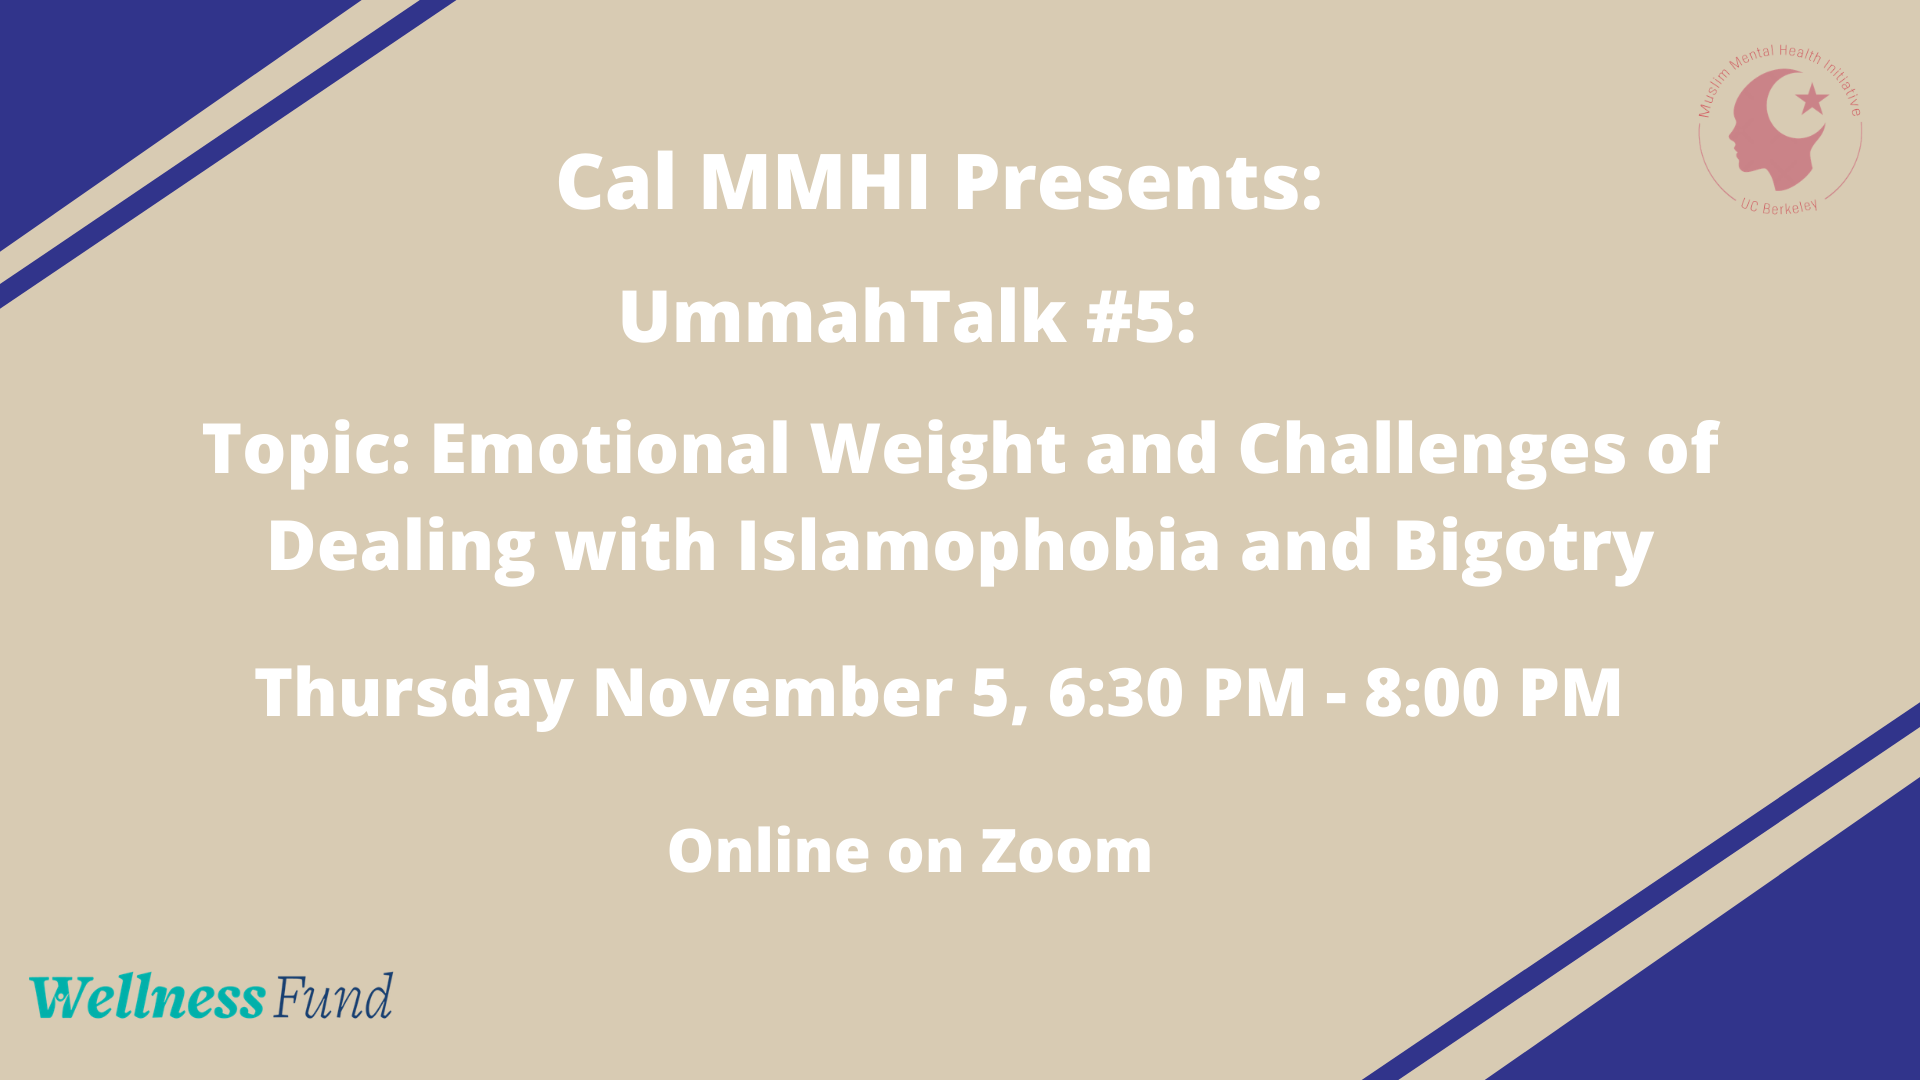 UmmahTalk #5 - 11/5/20 Emotional Weight and Challenges of Islamophobia and Bigotry